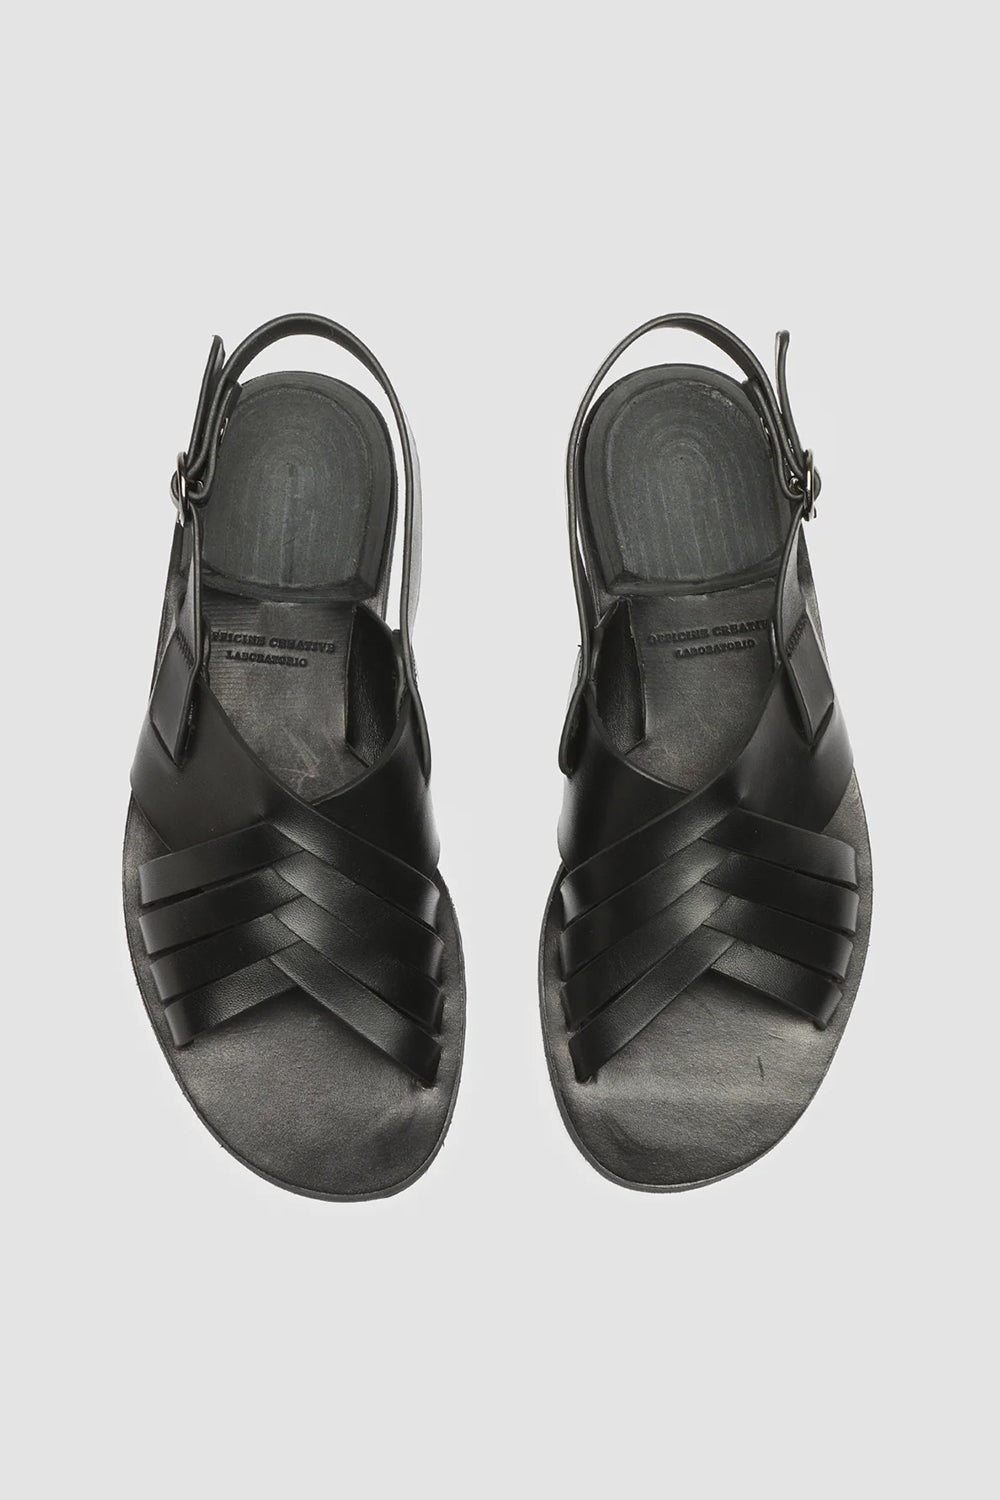 Officine Creative Contraire Sandals In Nappah Nero